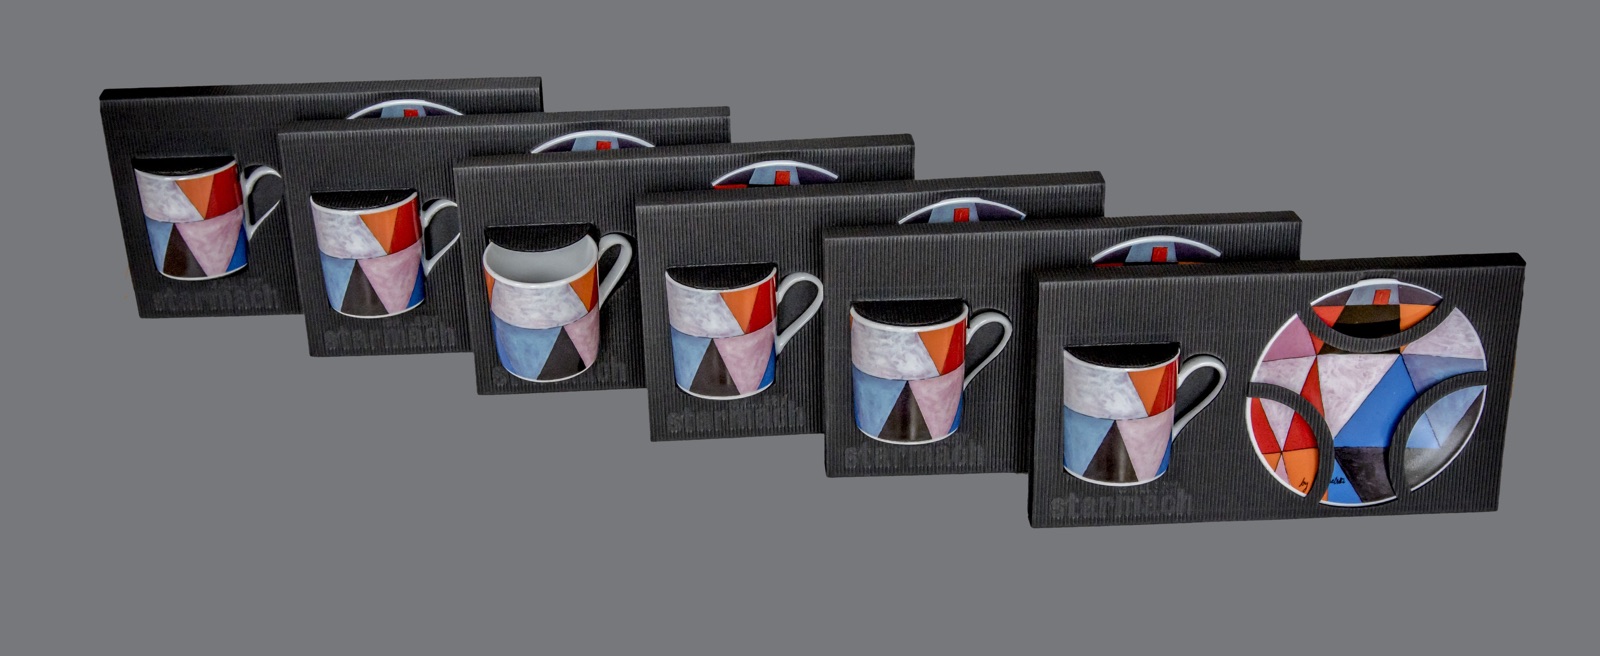 GALERIA STARMACH – Komplet 6 filiżanek do espresso z wzorem obrazu